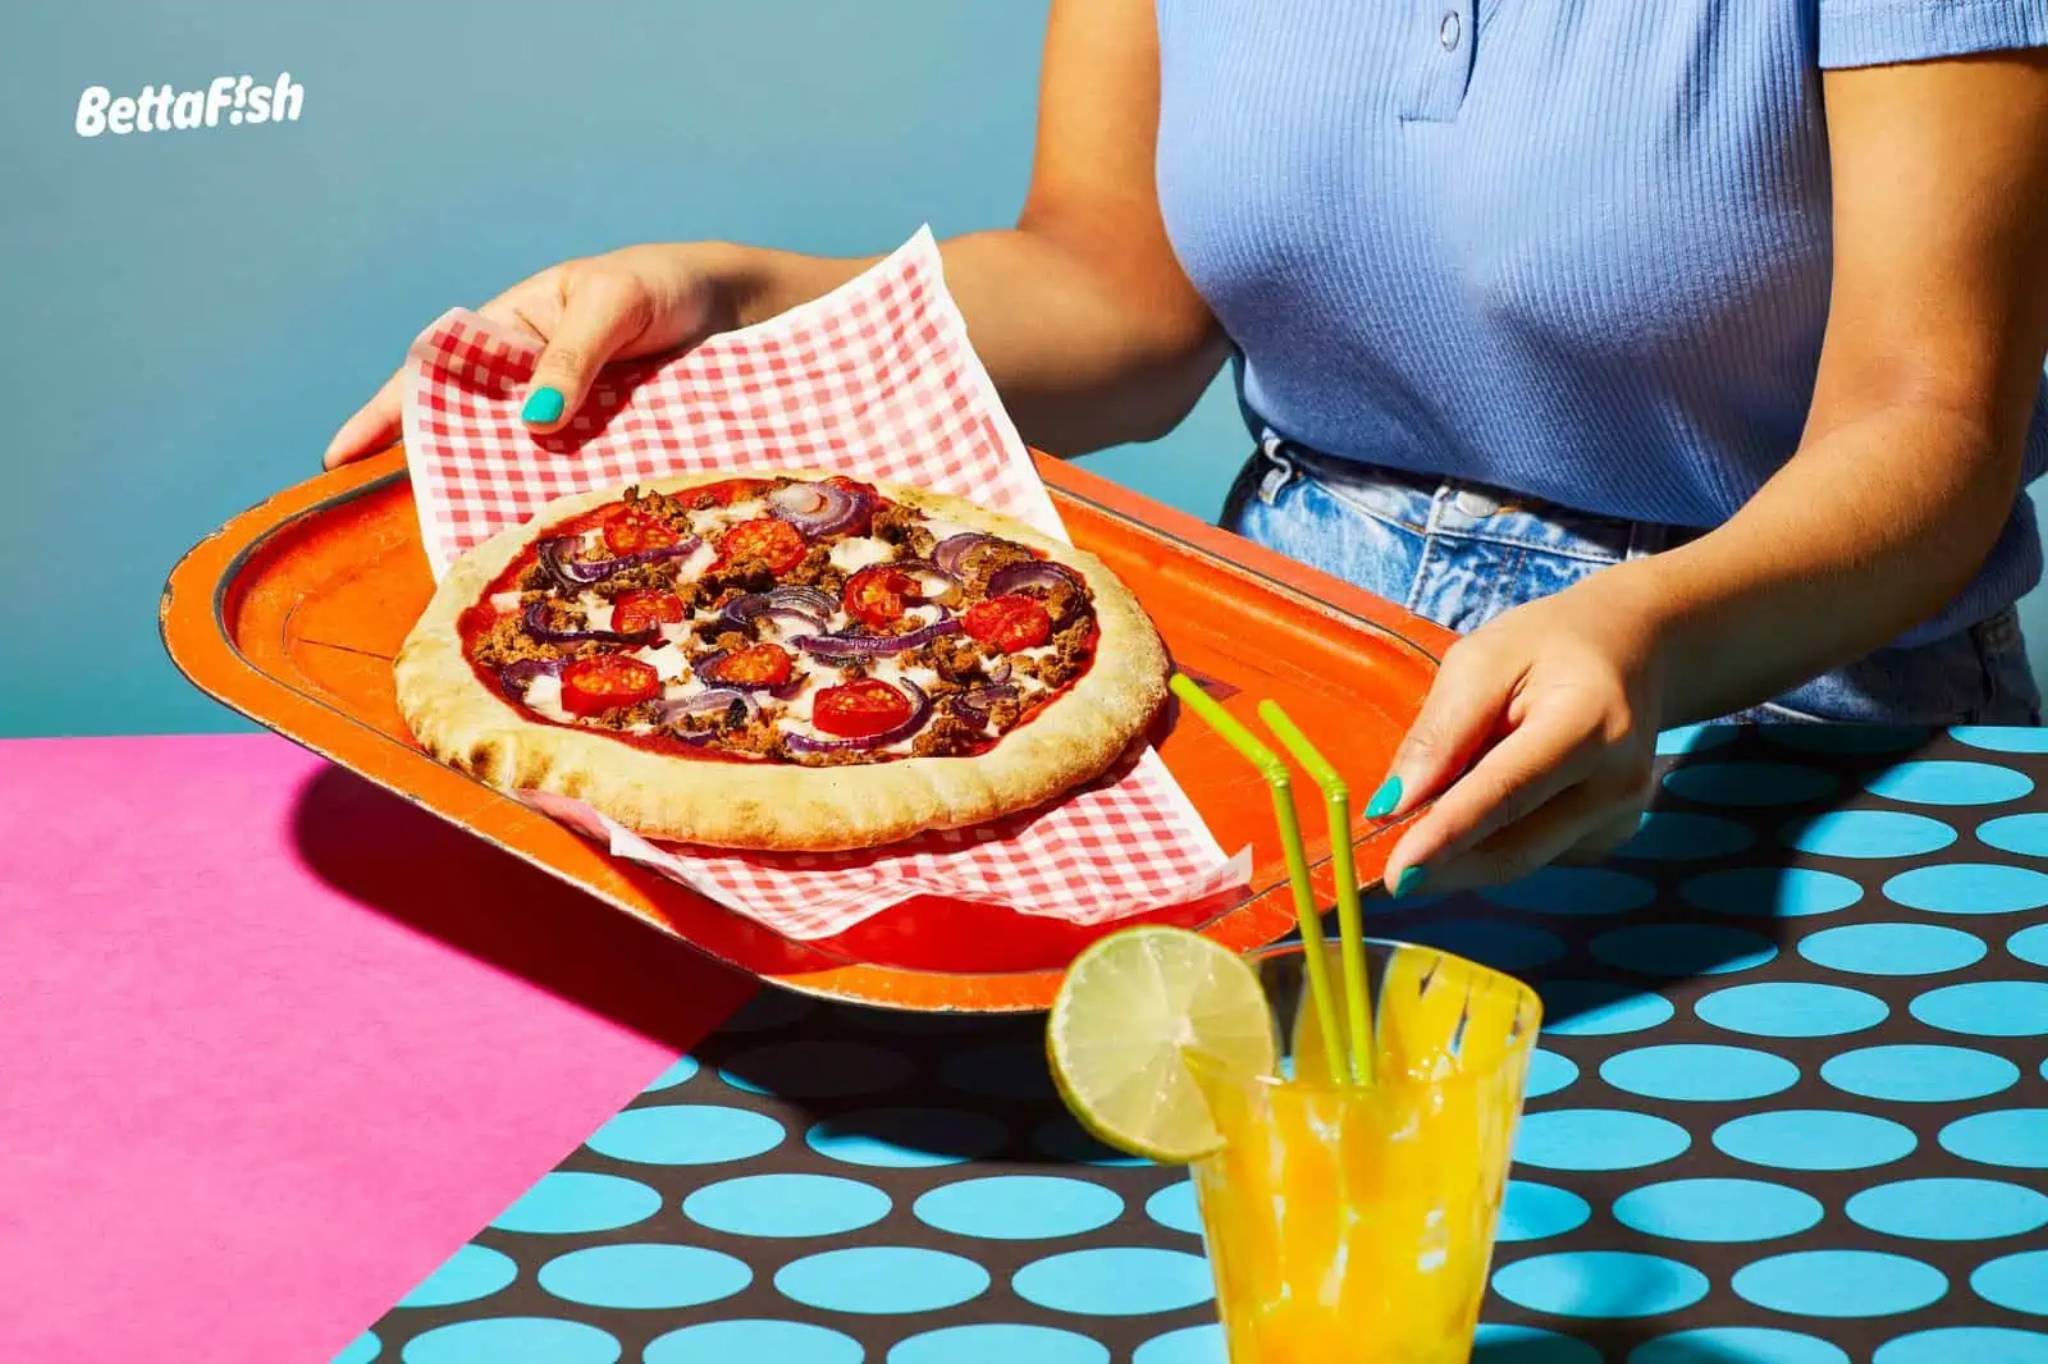 BettaF!sh pizzas make plant-based eating easy